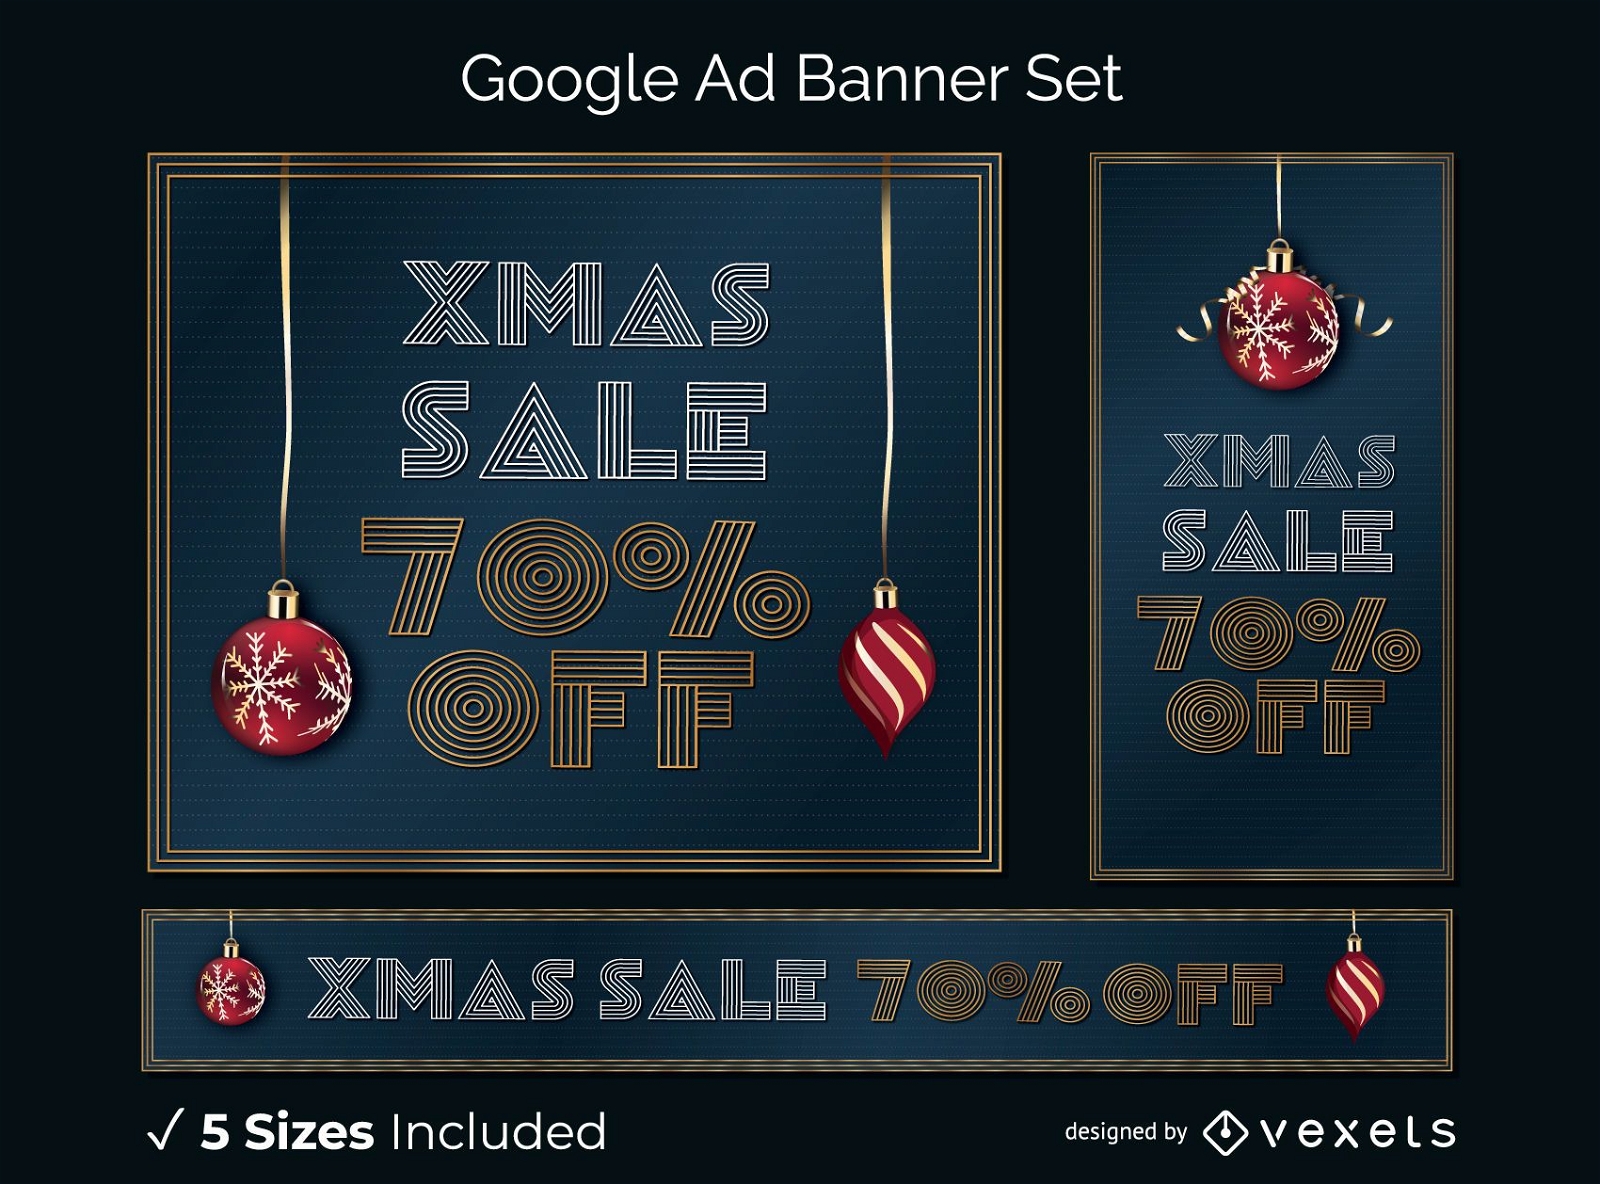 Xmas sale google ad banner set